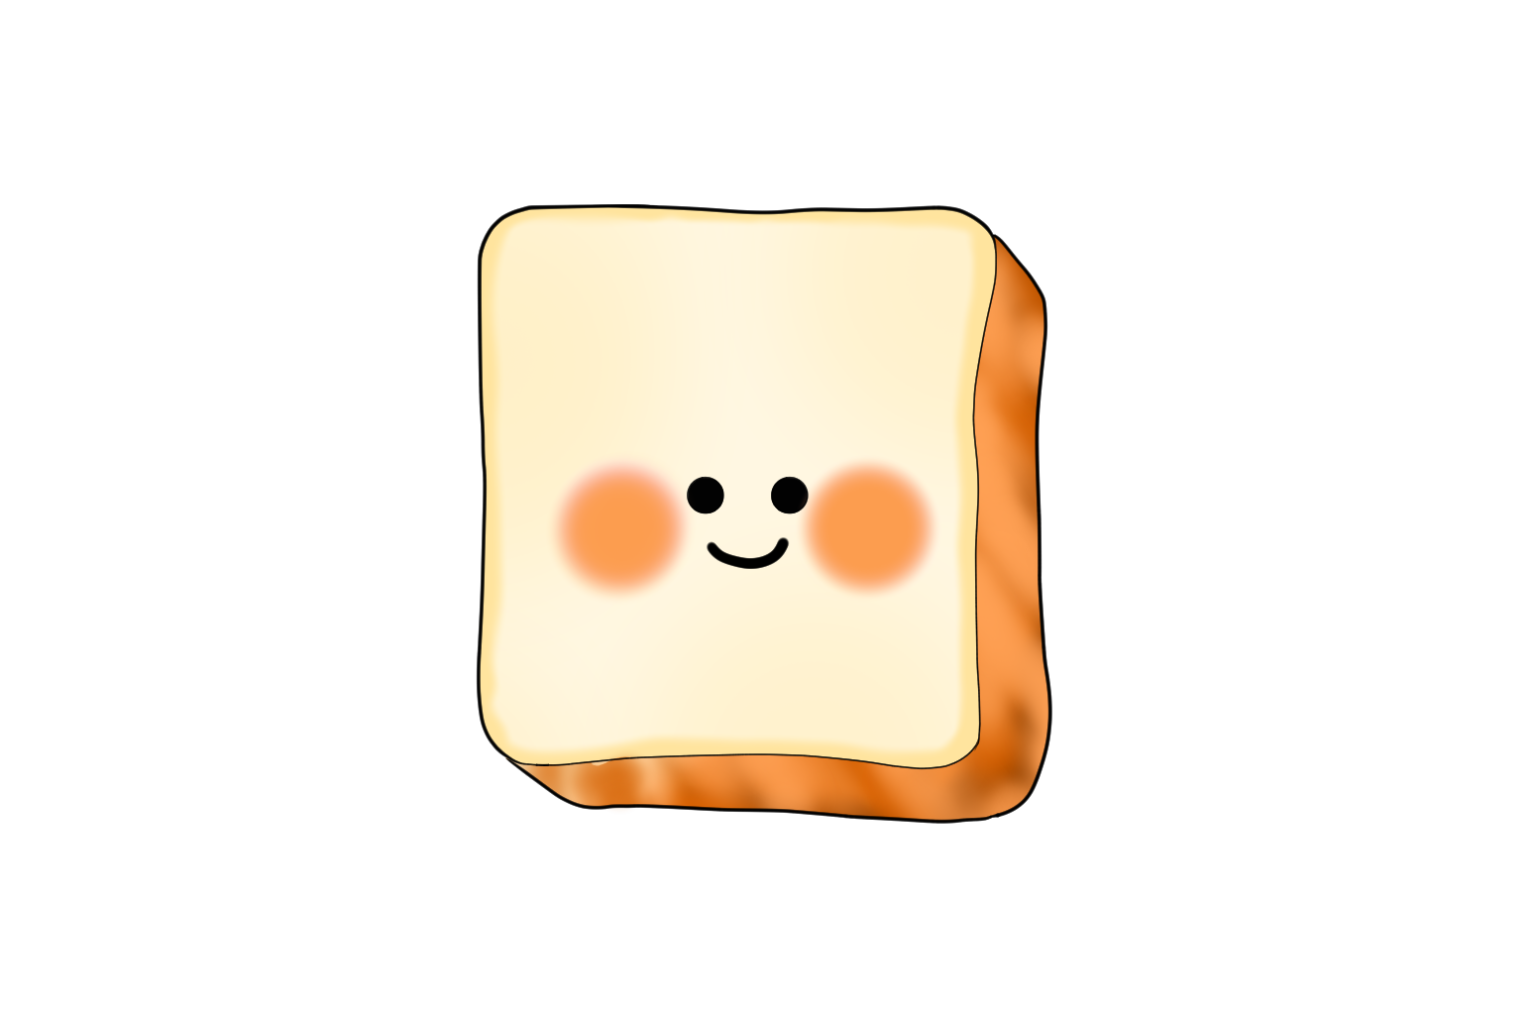 cute bread